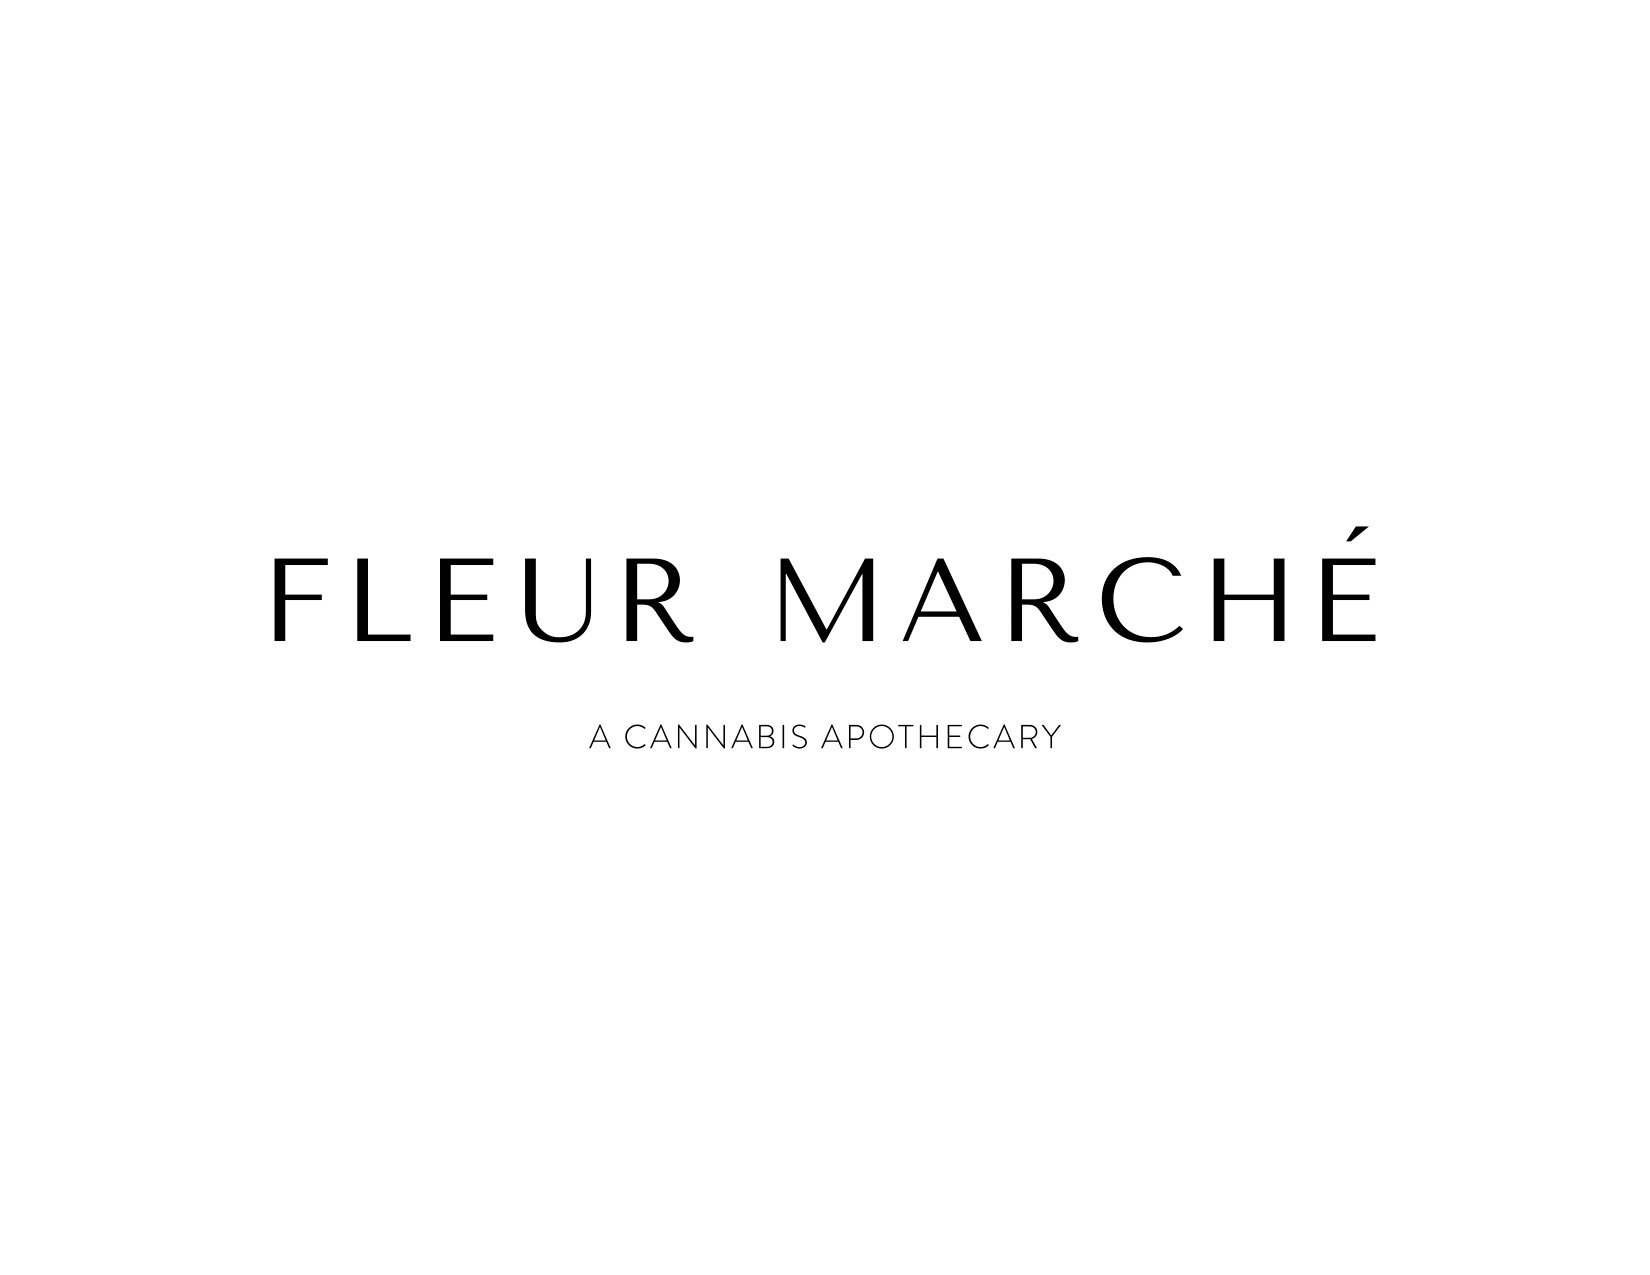 FleurMarche